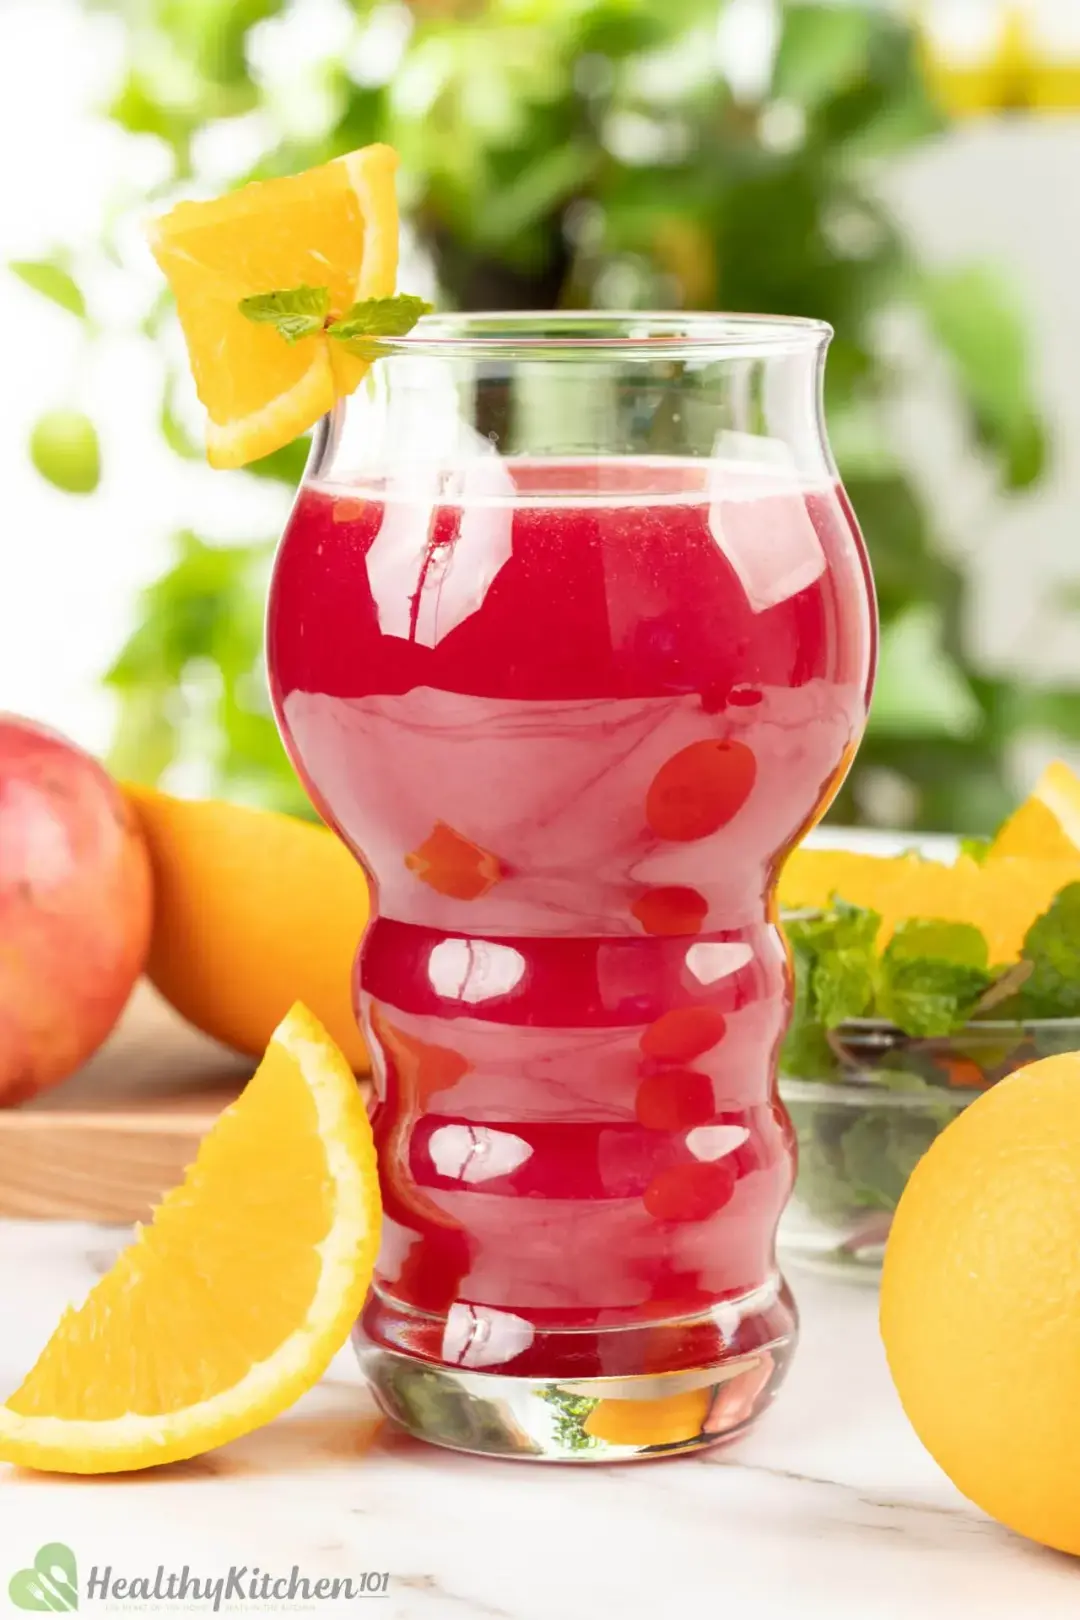 A glass of pomegranate orange juice put next to whole oranges and orange wedges